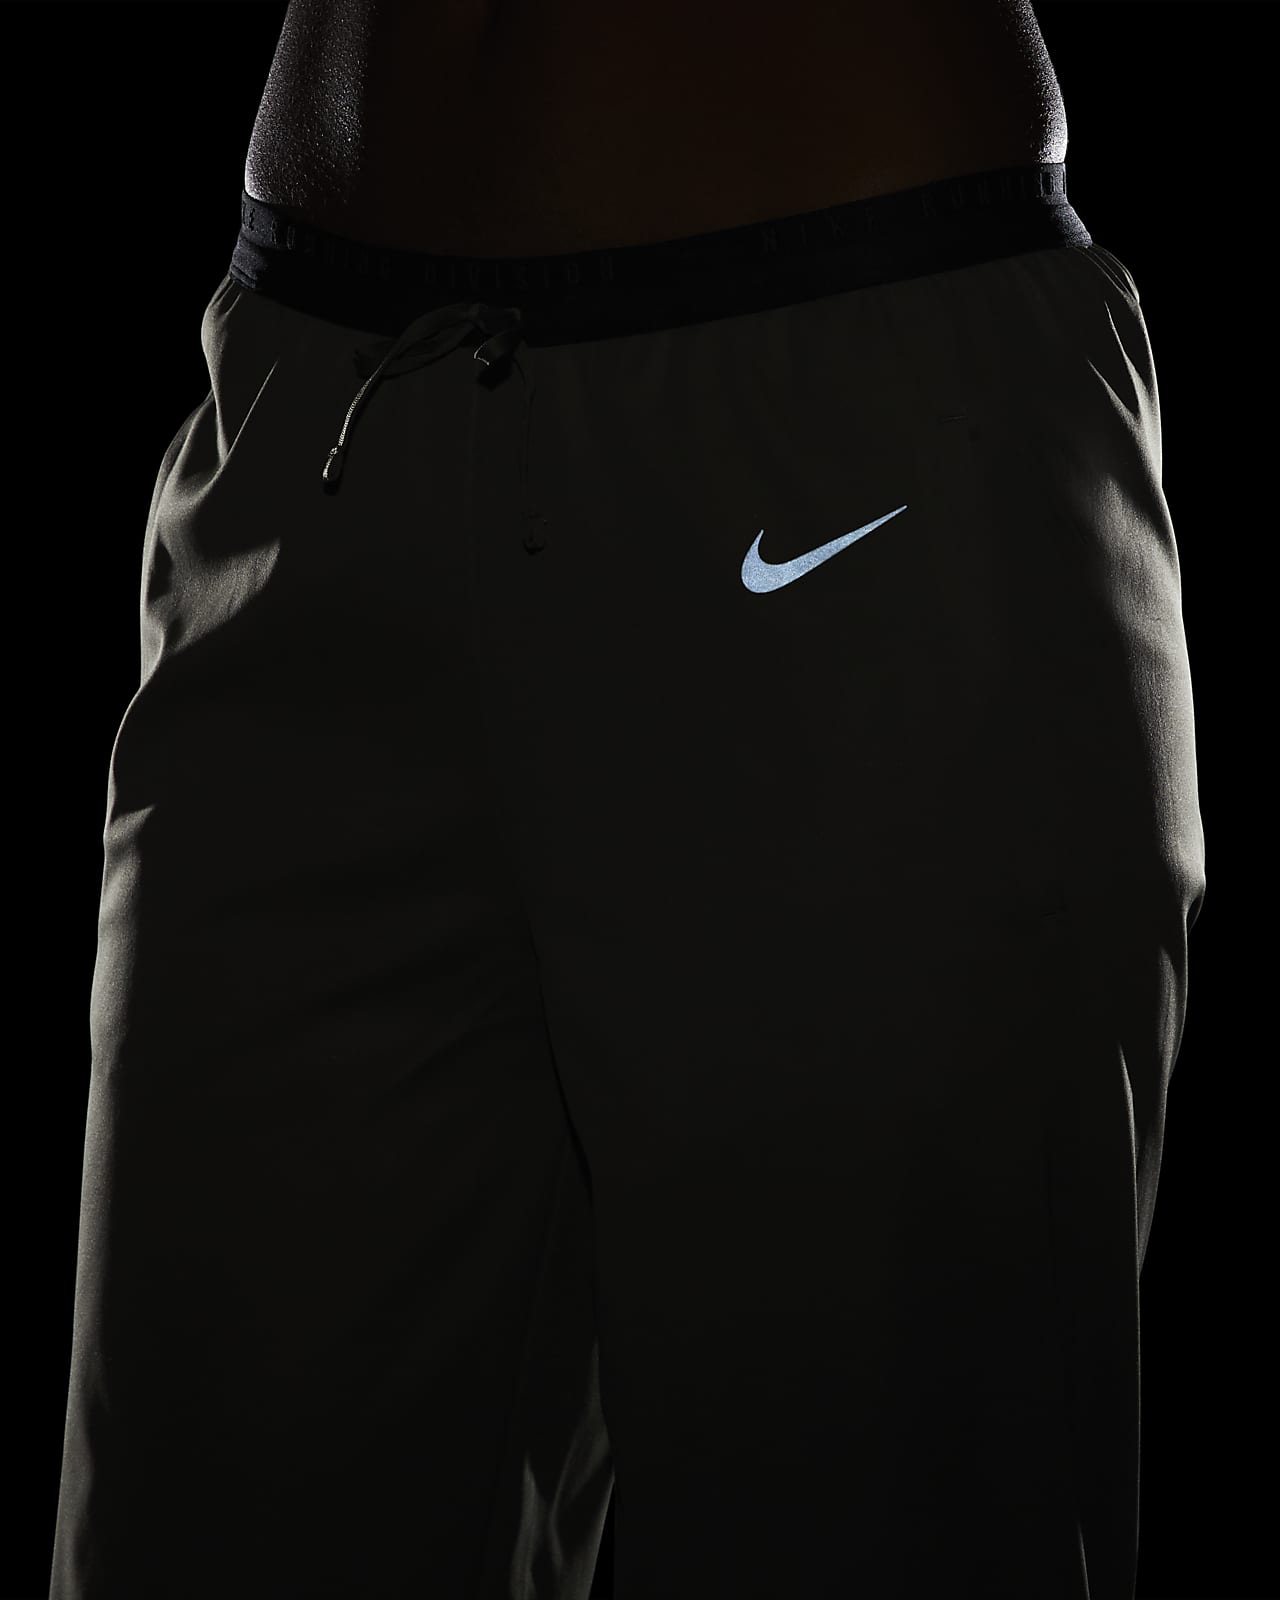 Nike The Athletic Dept. Black White Stripe Joggers Warm Up Pants Women XS  (0-2)